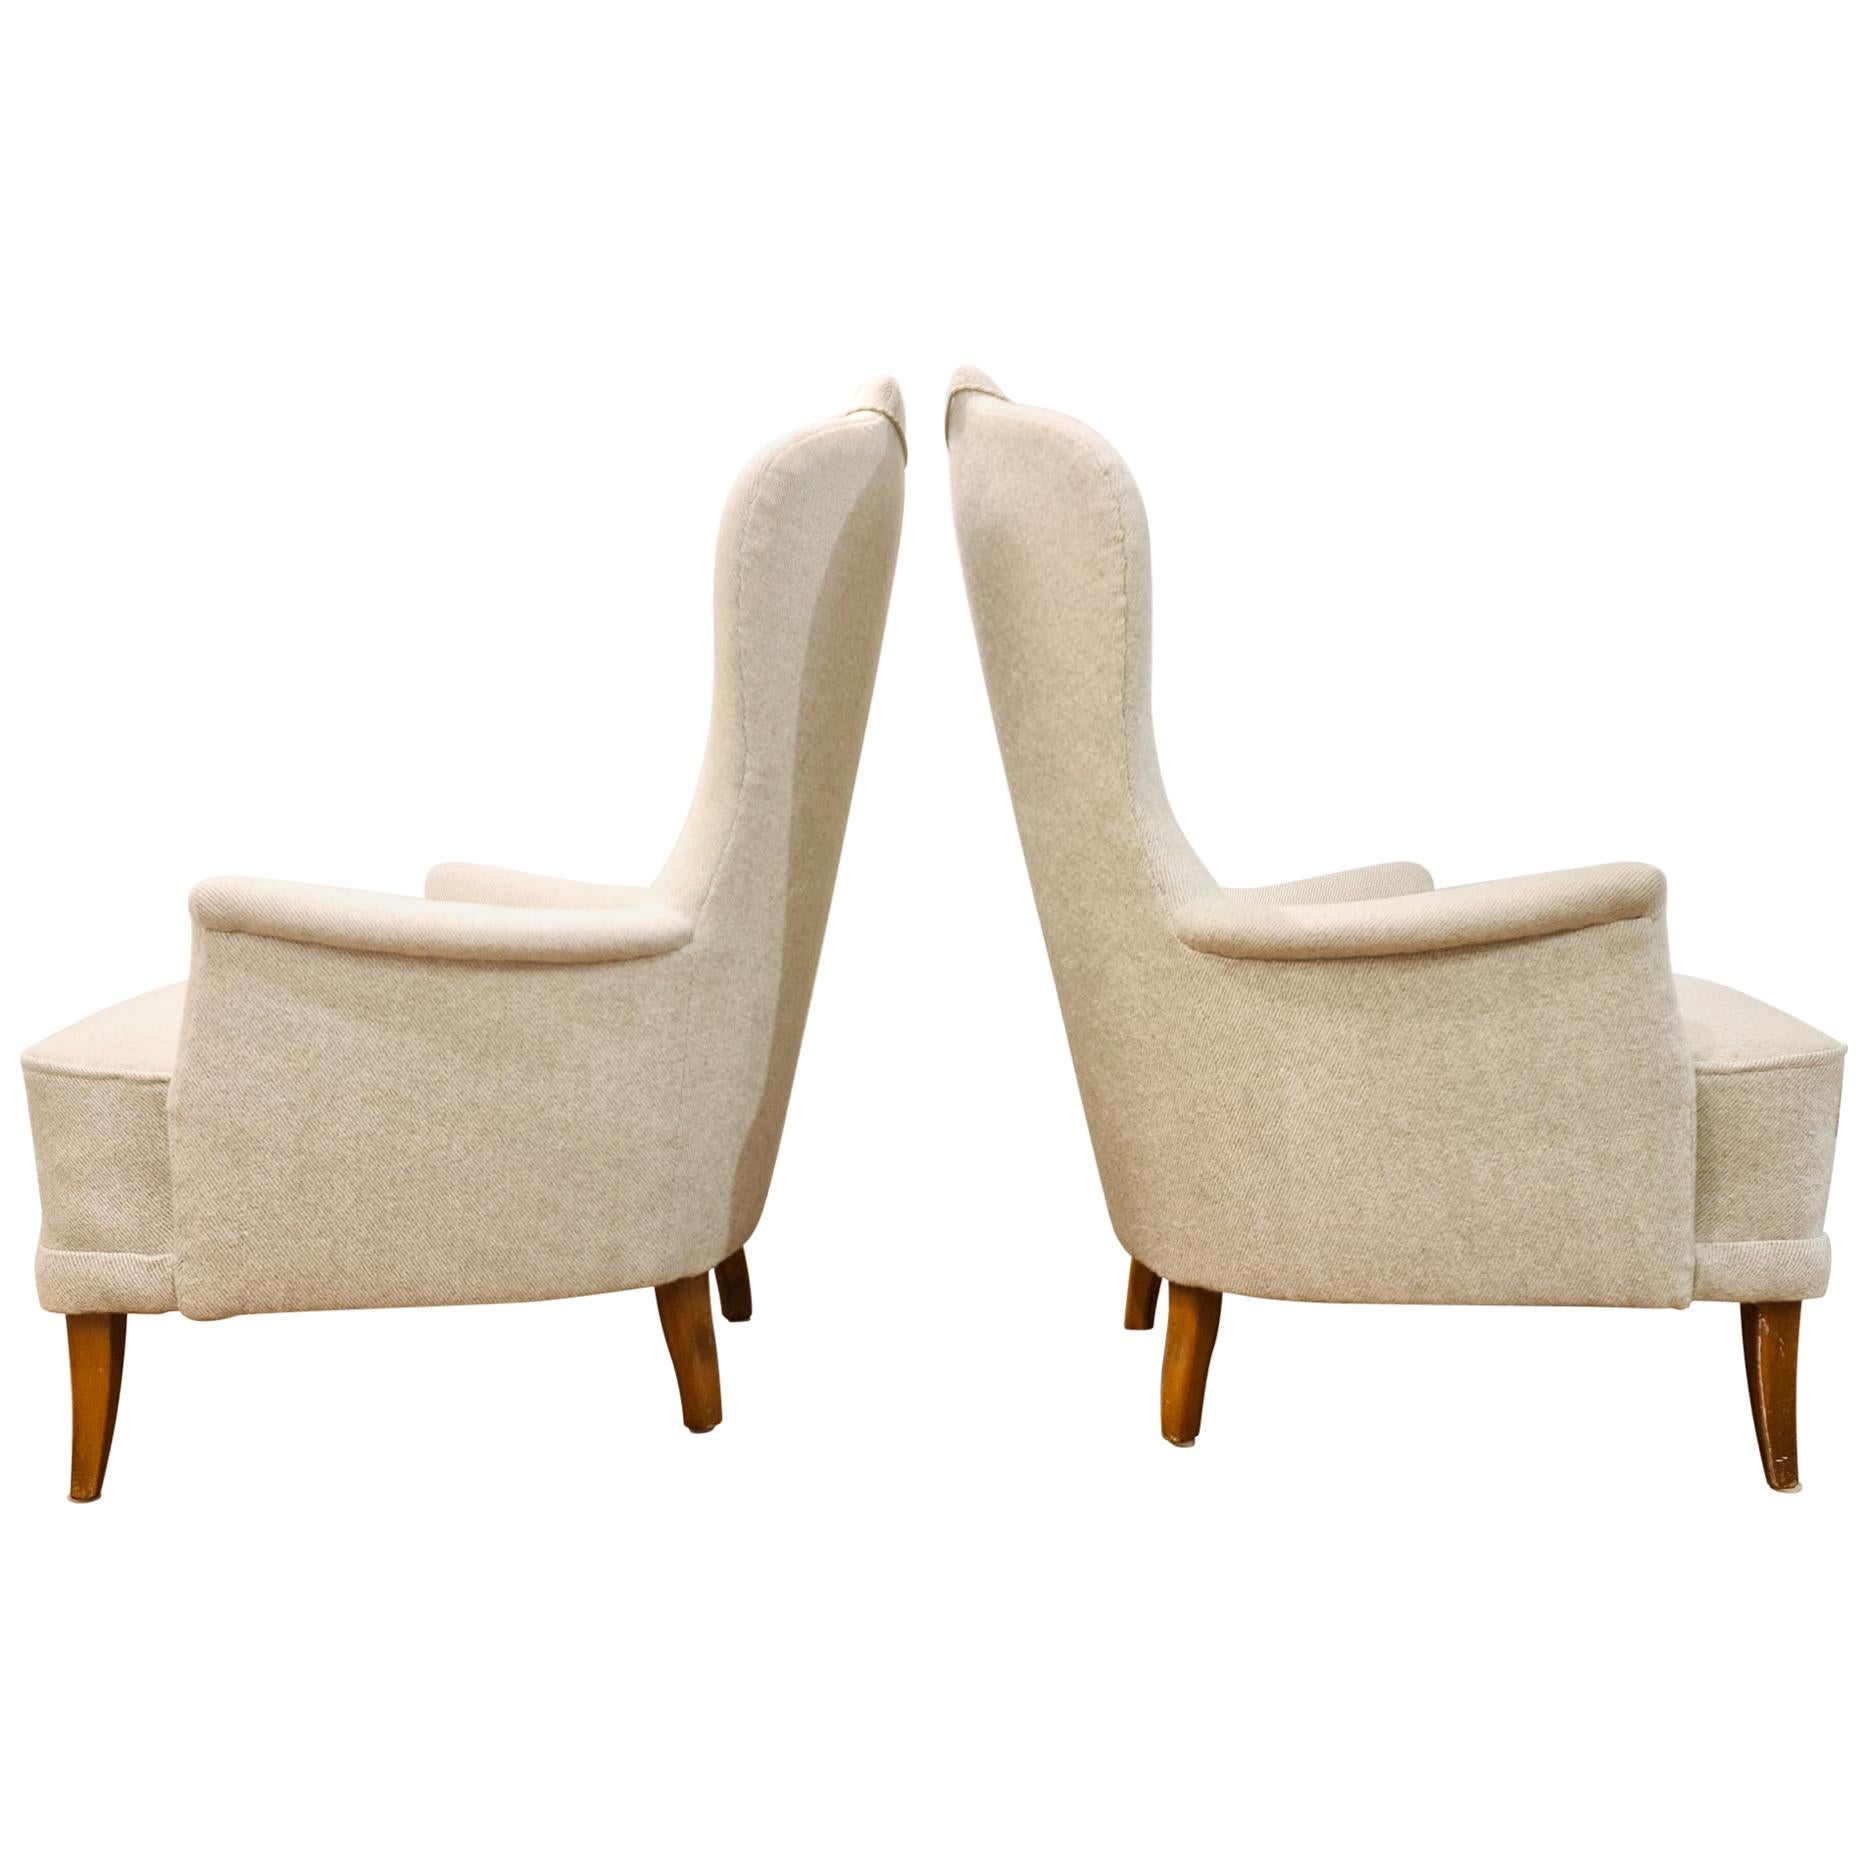 Carl Malmsten Model 'Farmor' Set of 2 Lounge Chairs Scandinavian Midcentury